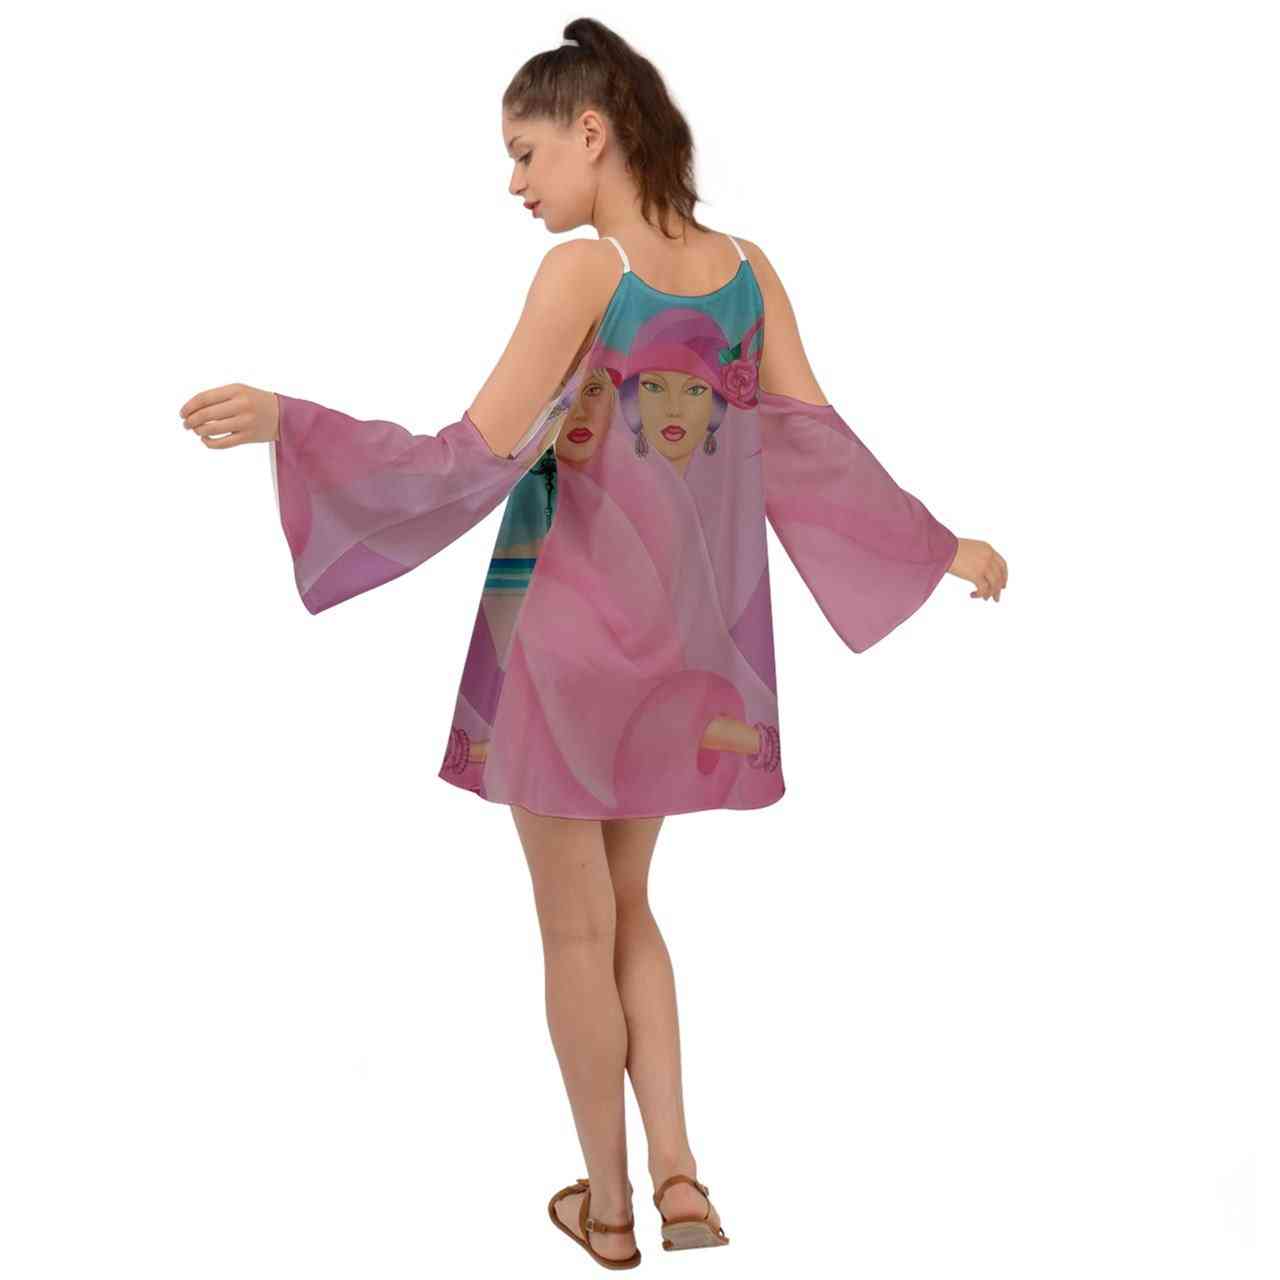 Palm beach - robe bohème pour femme